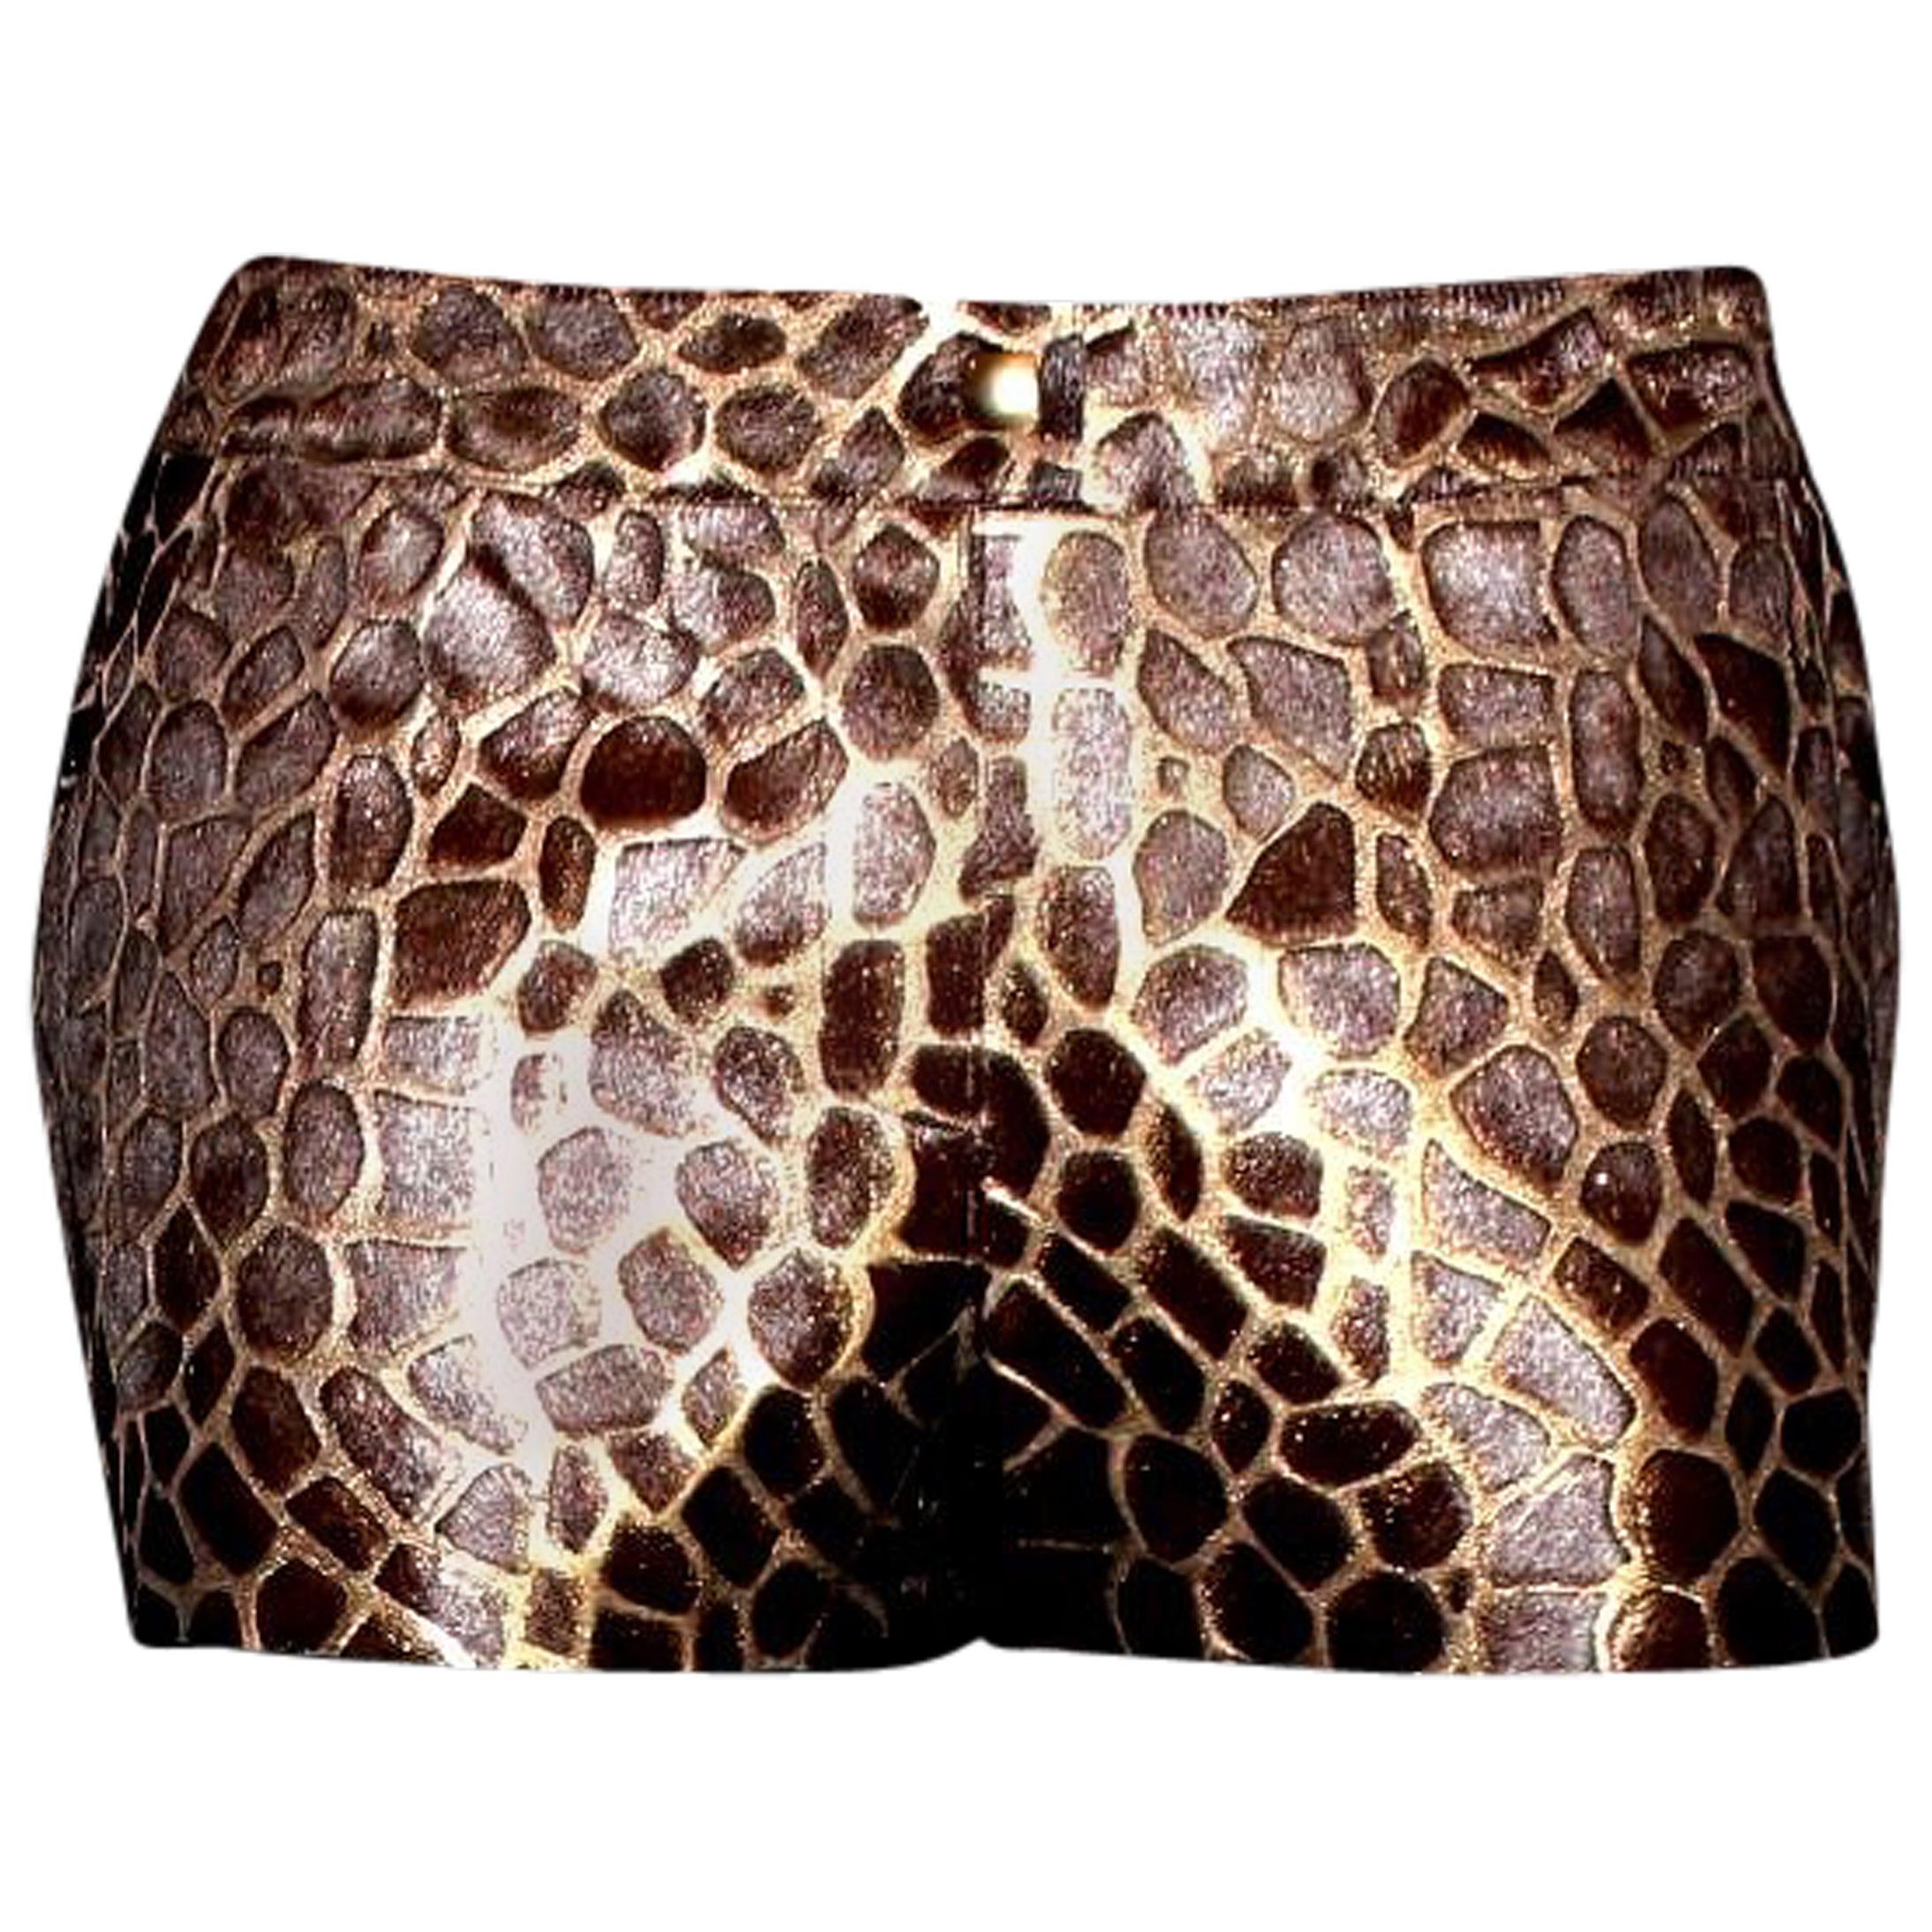 UNWORN Chanel Metallic Fur Giraffe Animal Print Safari Hot Pants Shorts 40 In Good Condition For Sale In Switzerland, CH